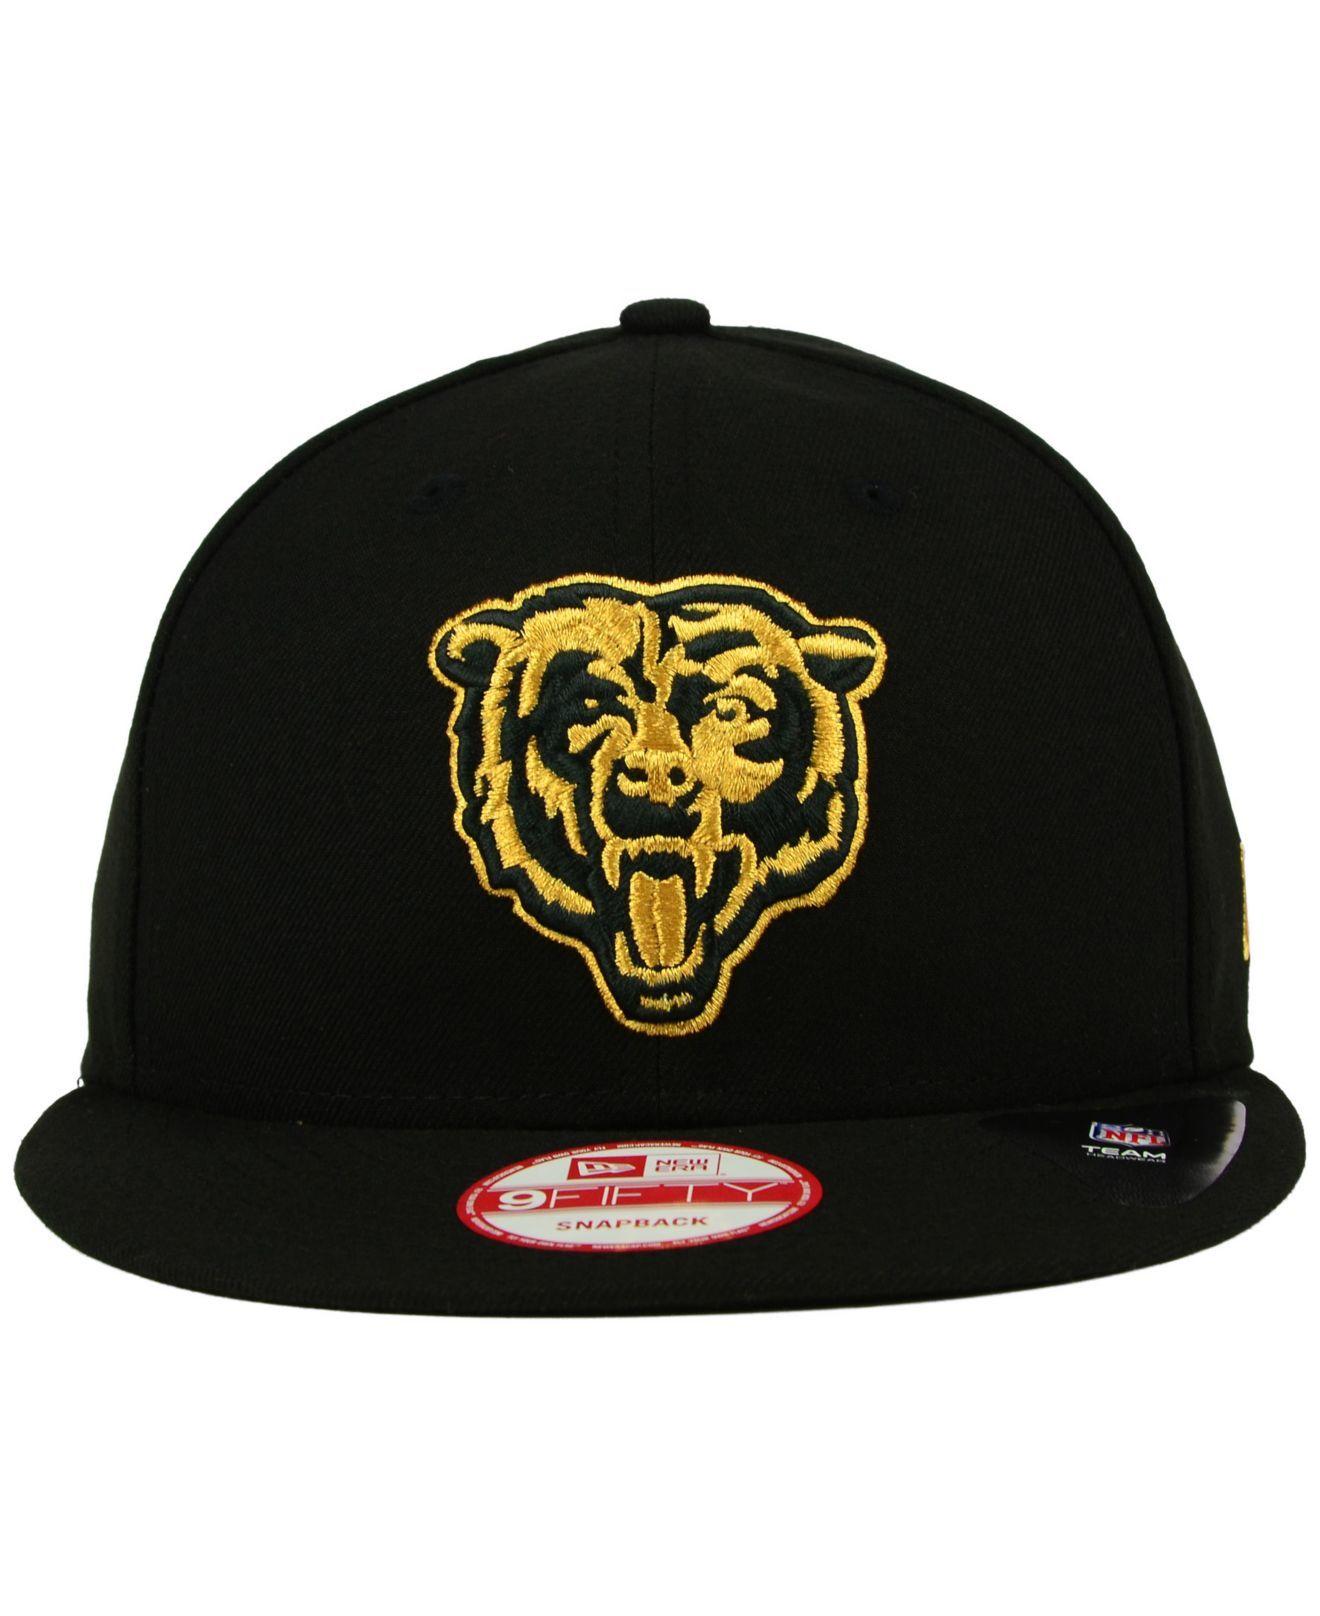 Gold Bears Logo - Lyst Chicago Bears Black Metallic Gold 9fifty Snapback Cap